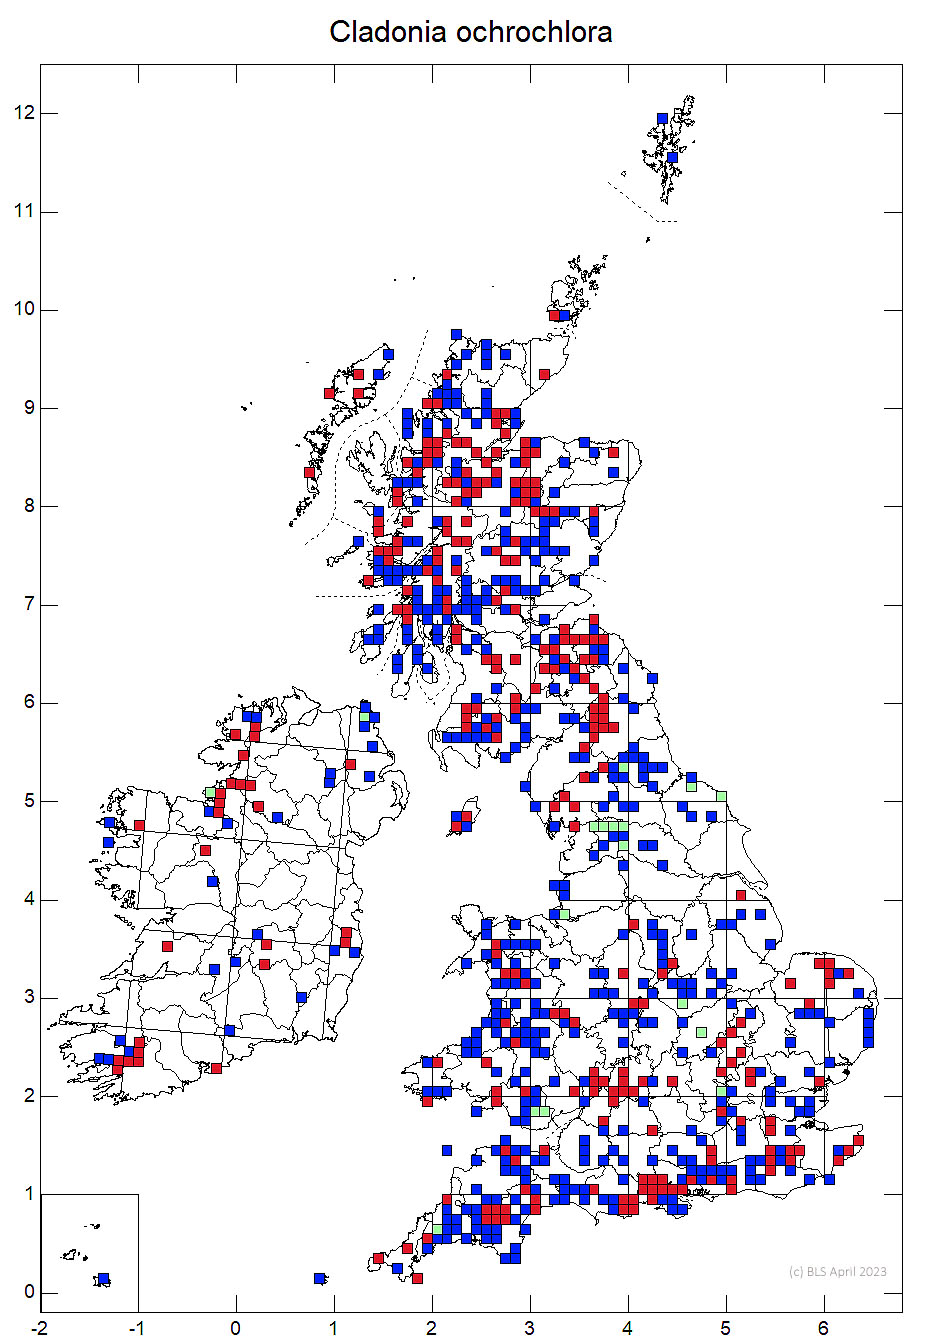 Cladonia ochrochlora 10km sq distribution map